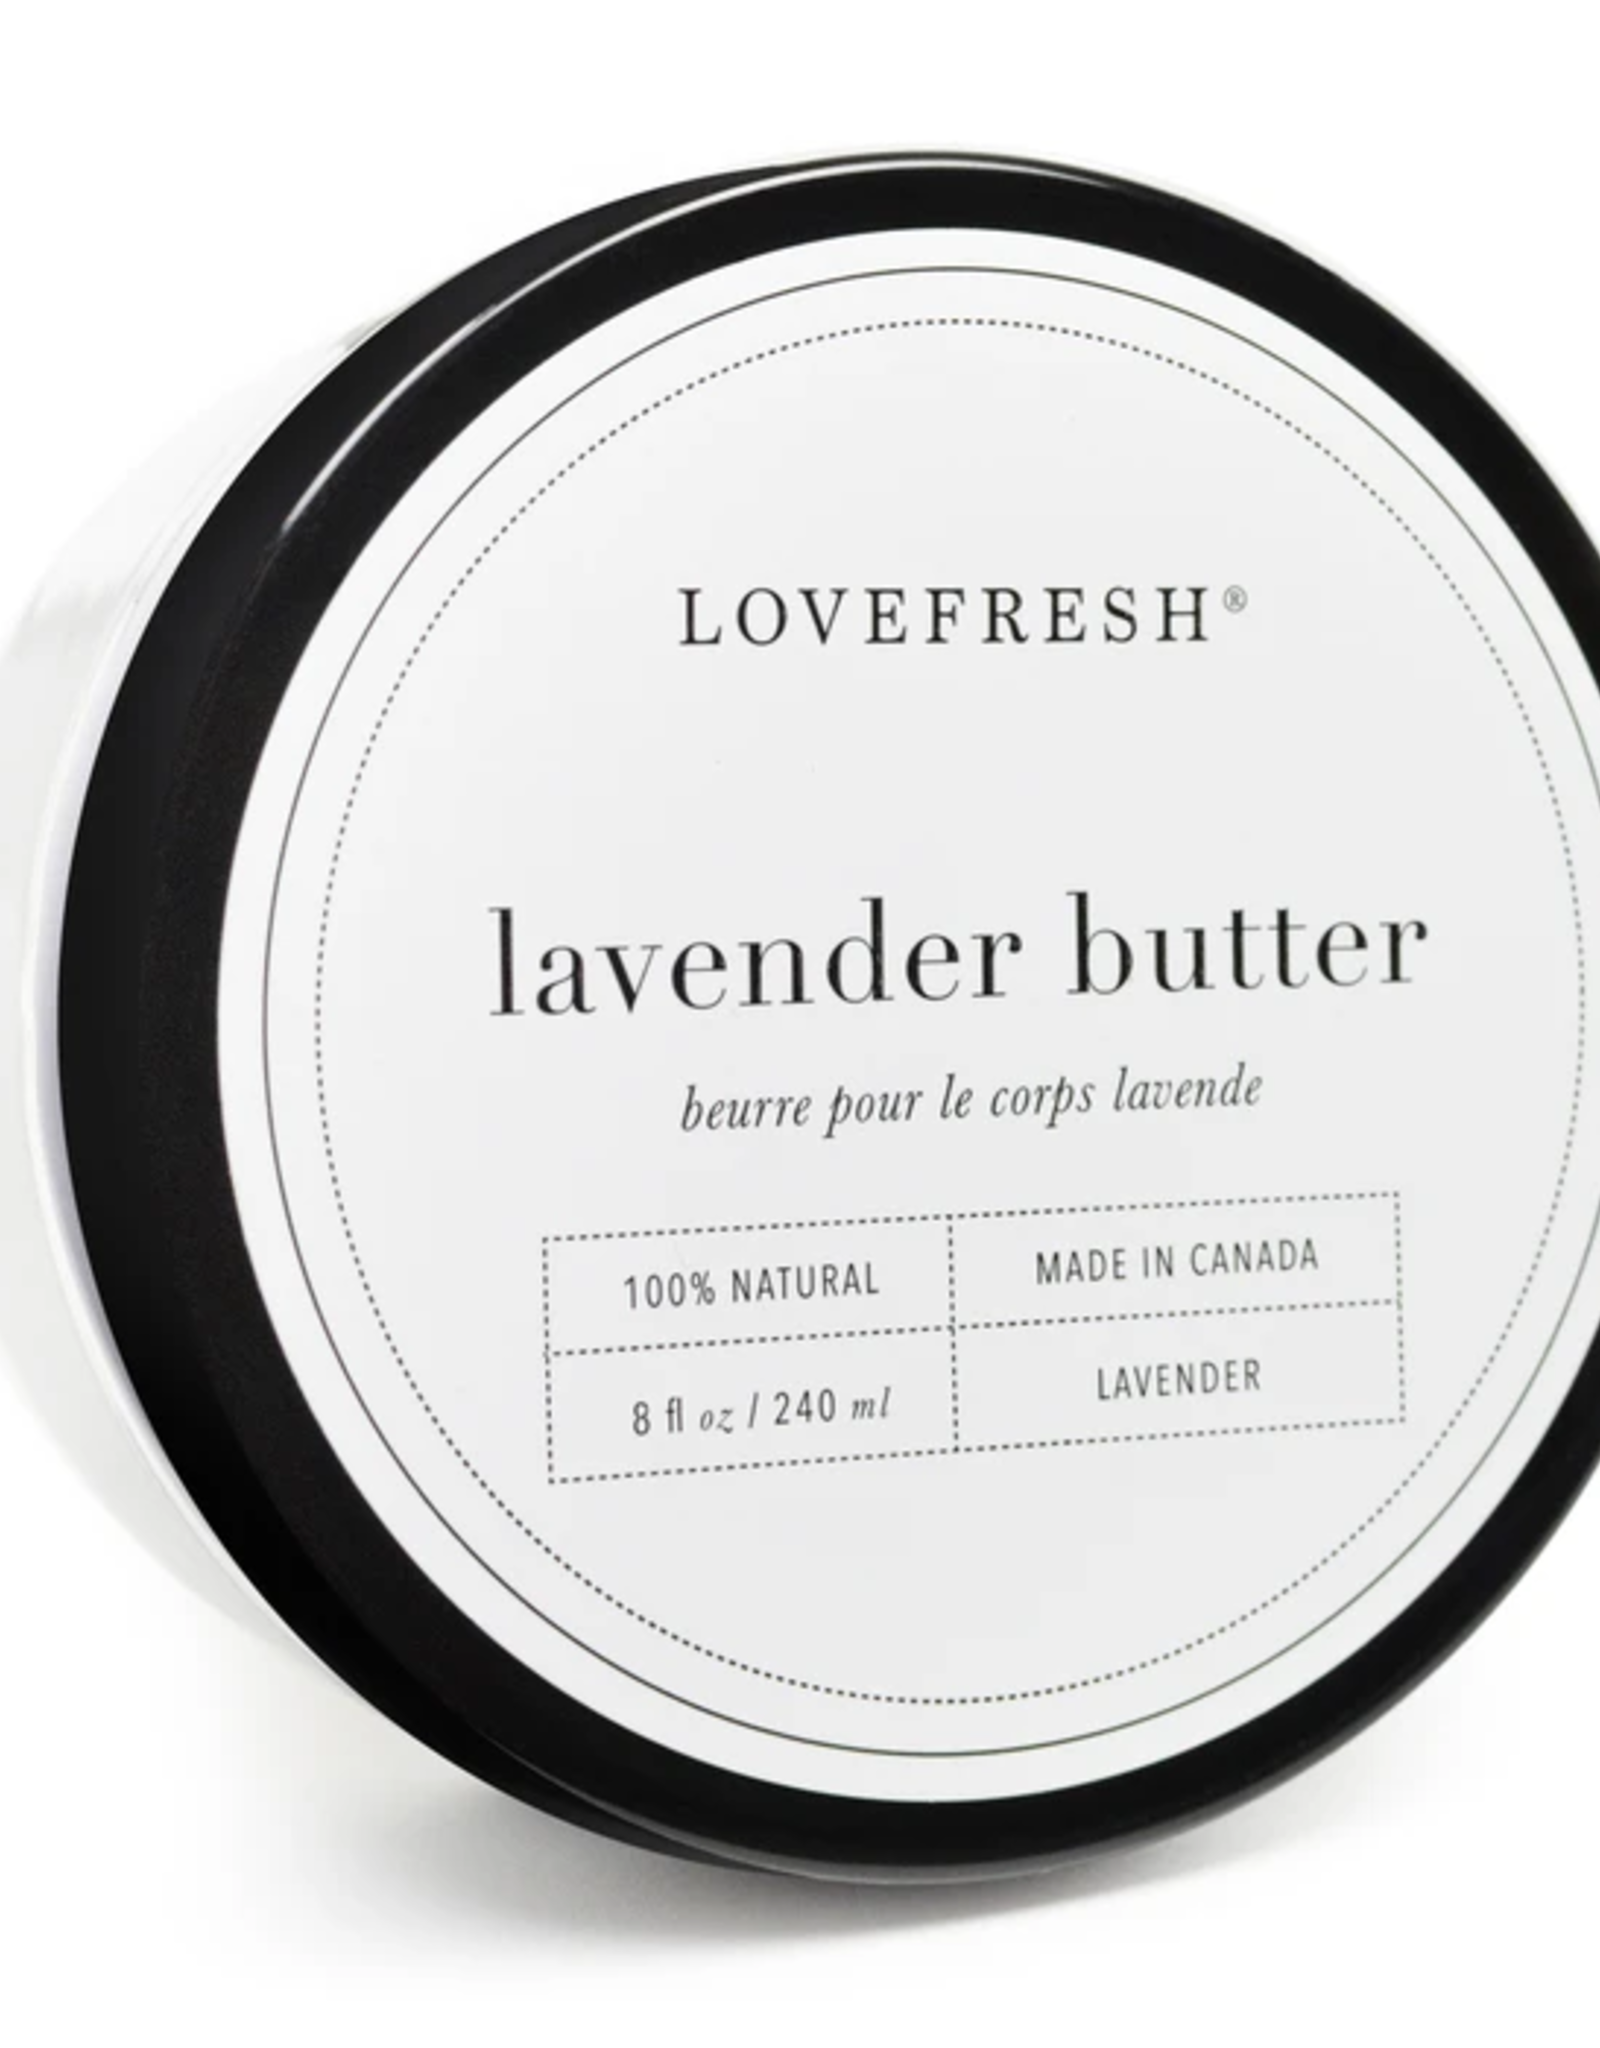 Lovefresh Body Butter